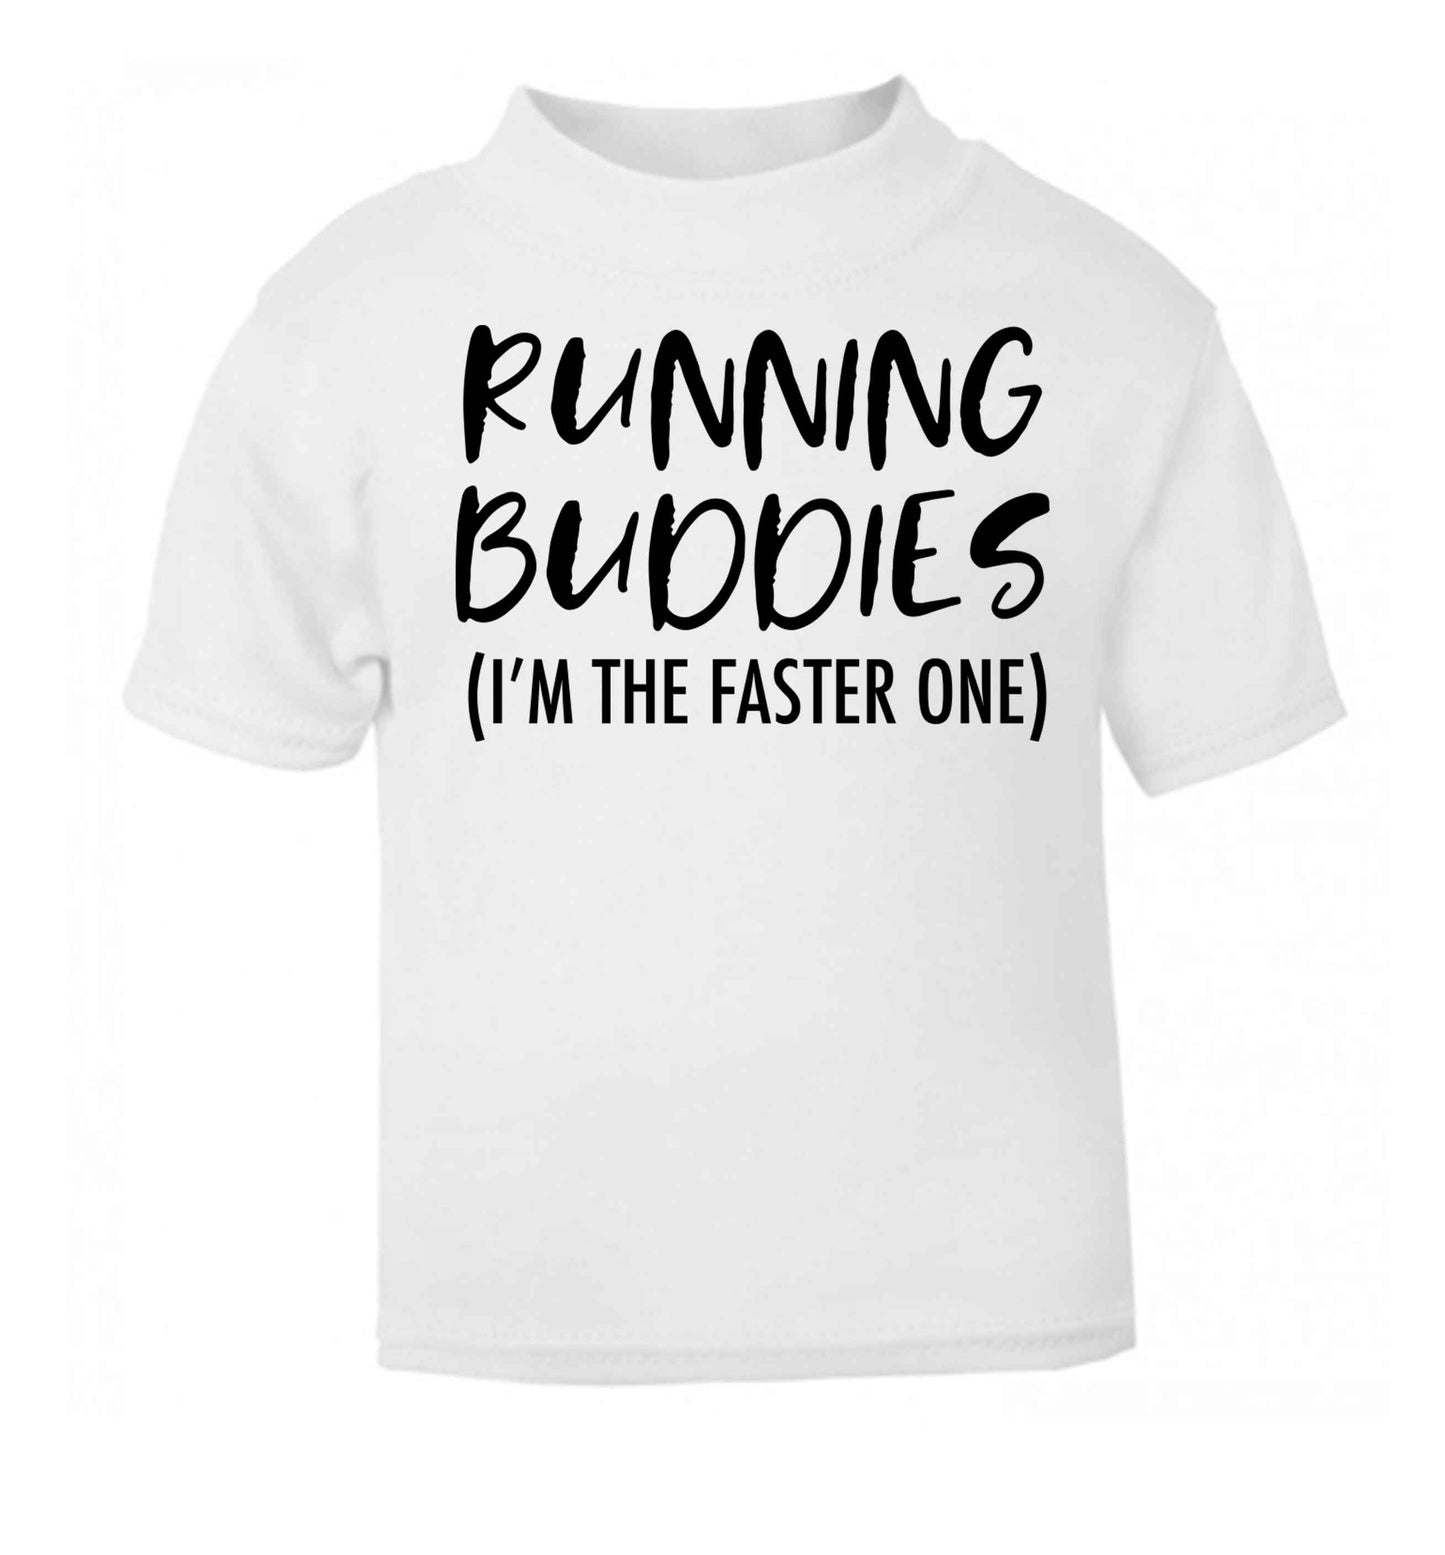 Running buddies (I'm the faster one) white baby toddler Tshirt 2 Years